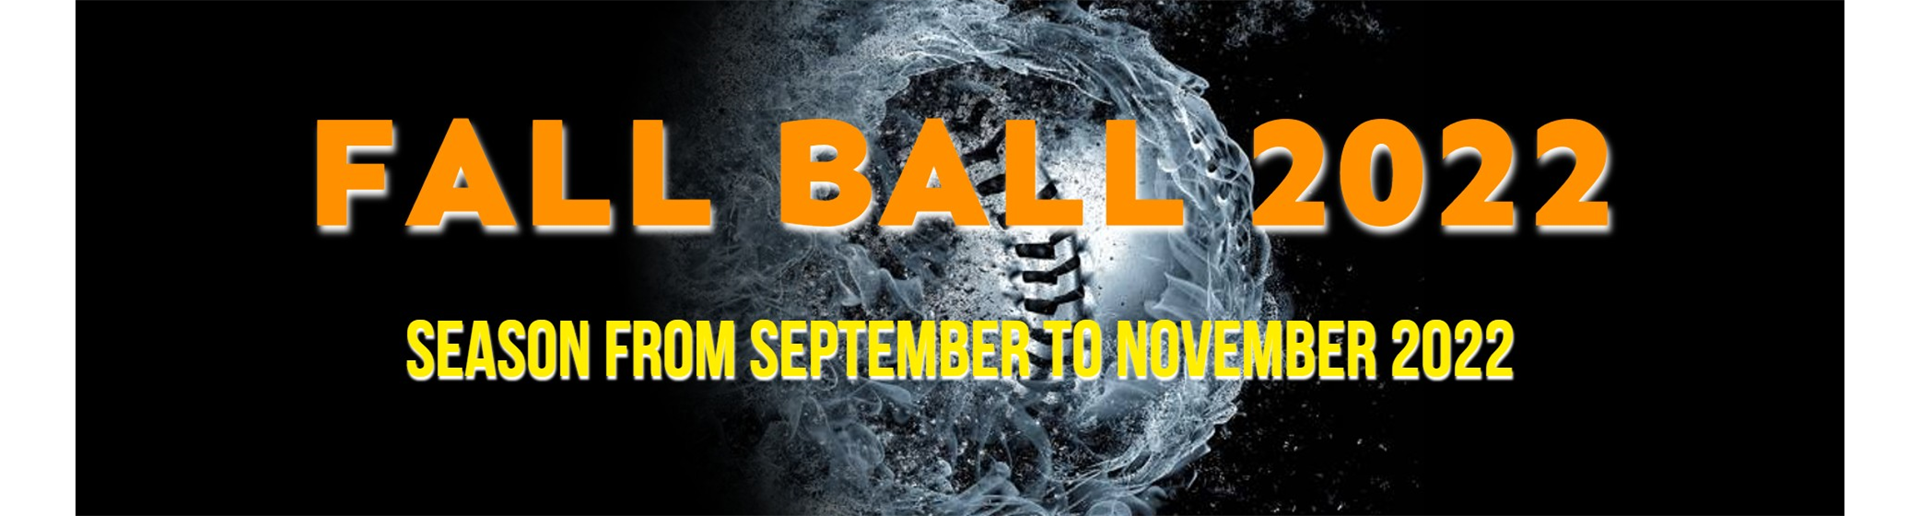 Fall Ball 2022